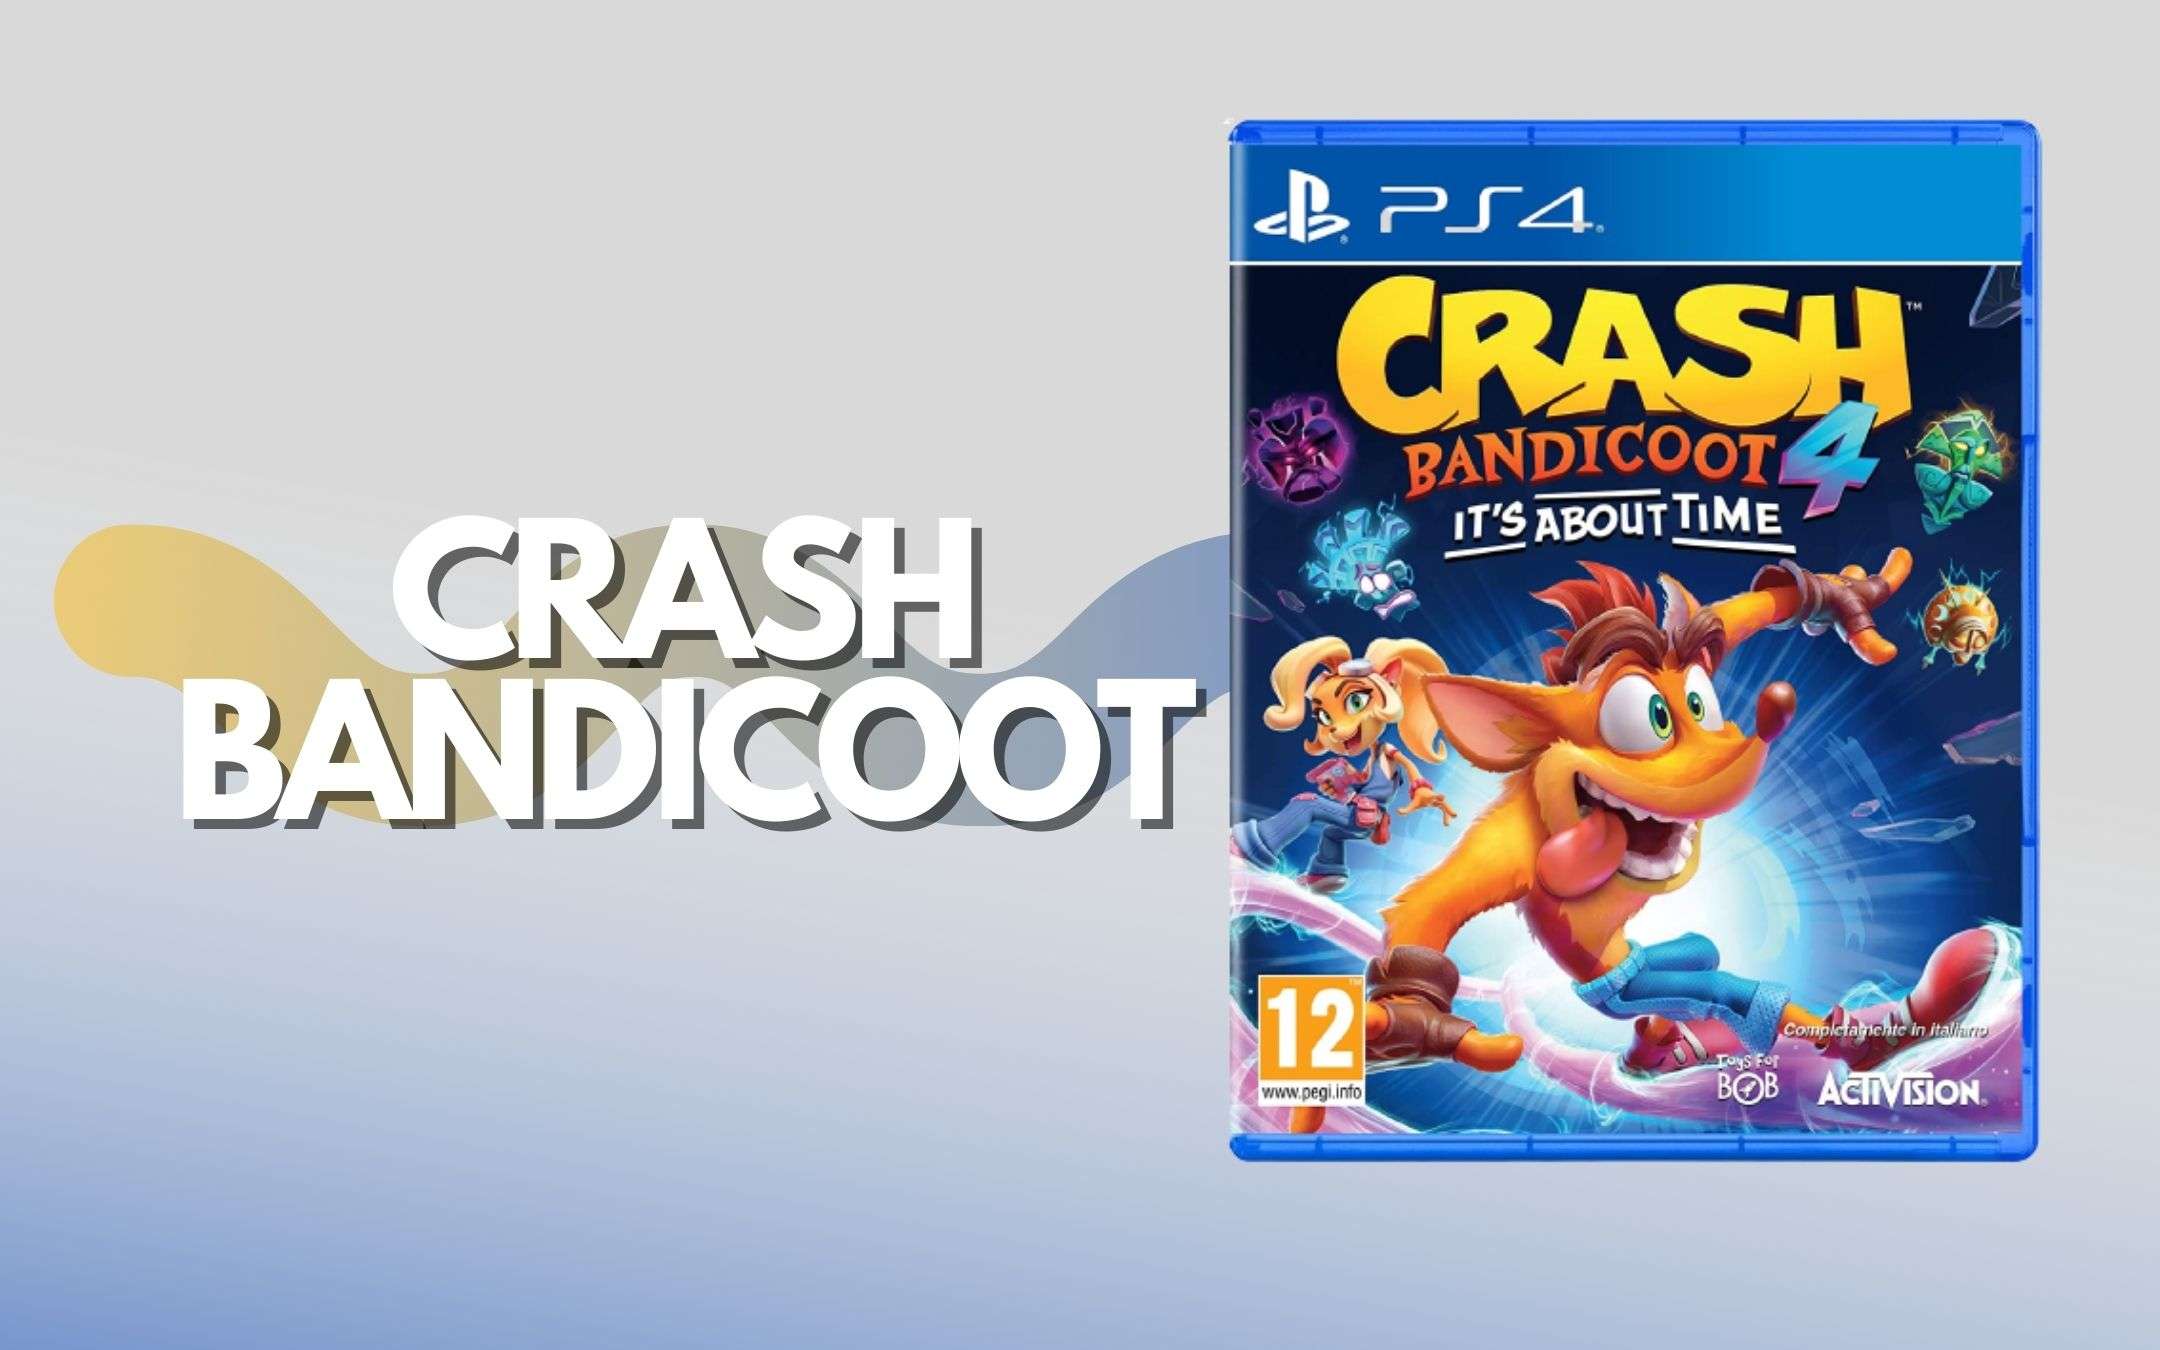 Crash Bandicoot 4: prezzo BOMBA su Amazon (-30€)